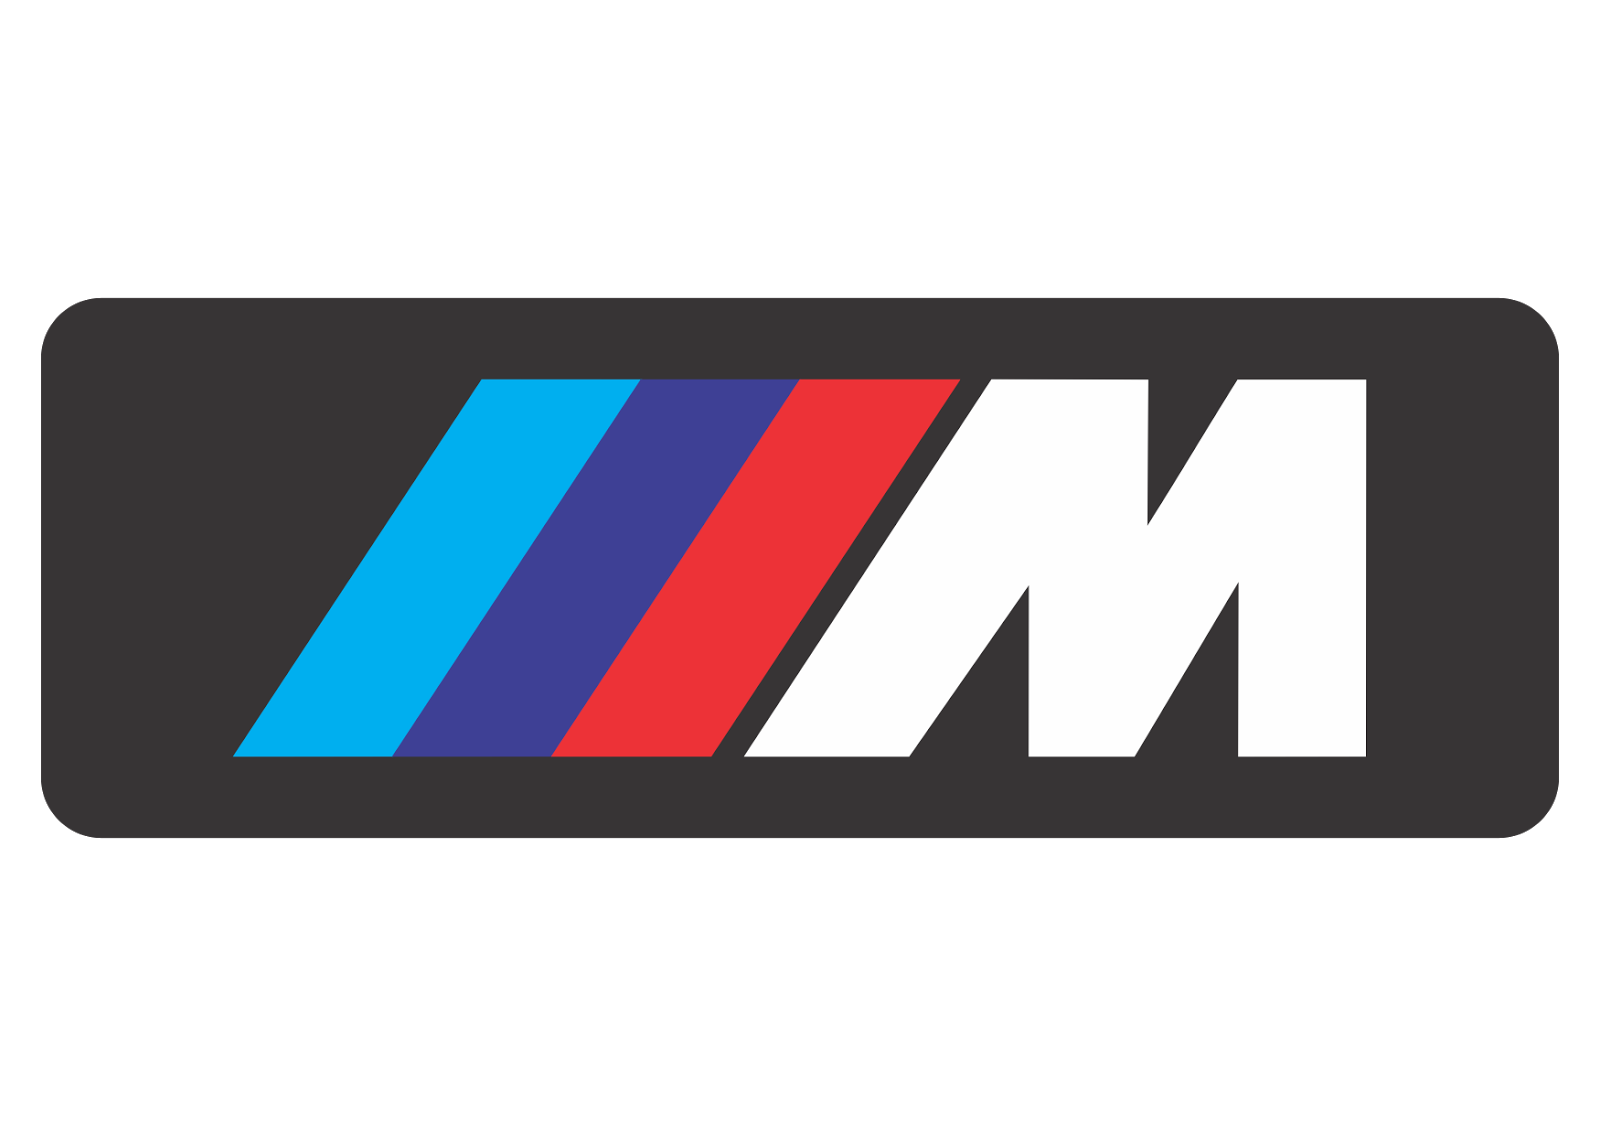 Bmw motorsport logo vector #2